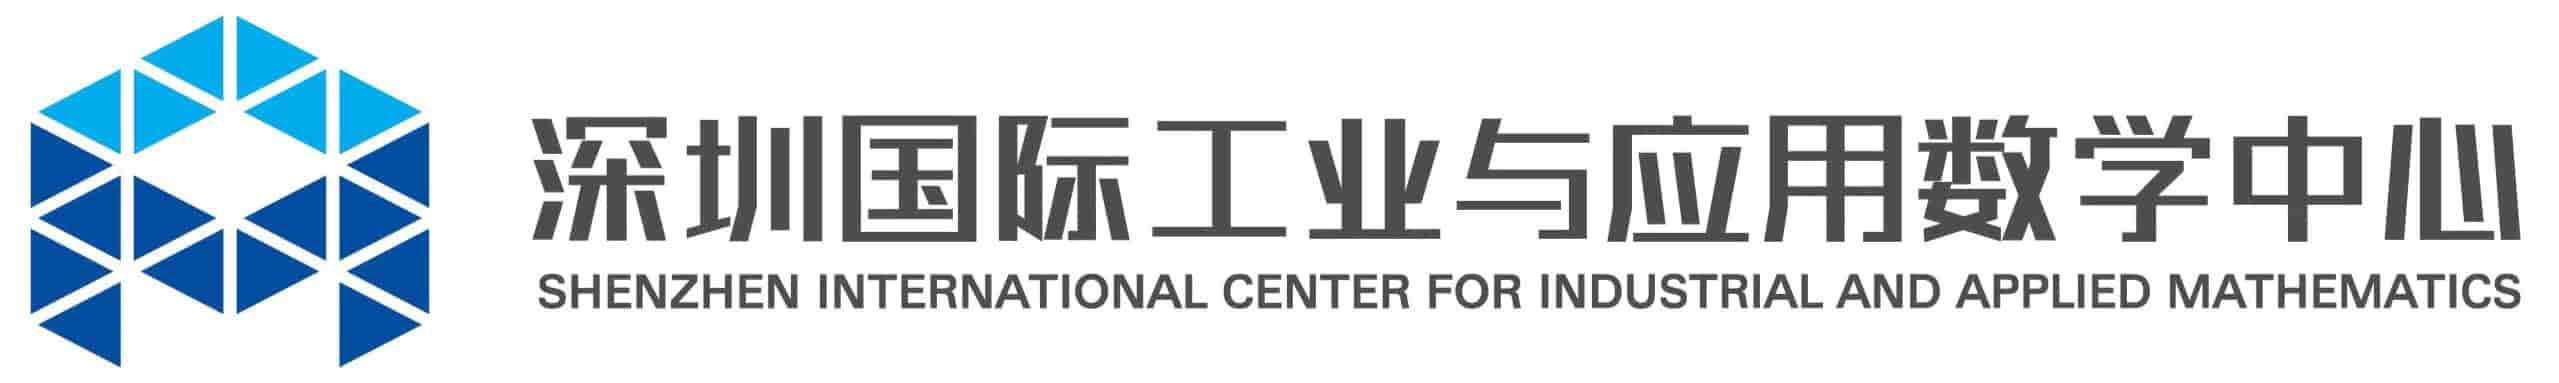 Shenzhen International Center for Industrial and Applied Mathematics